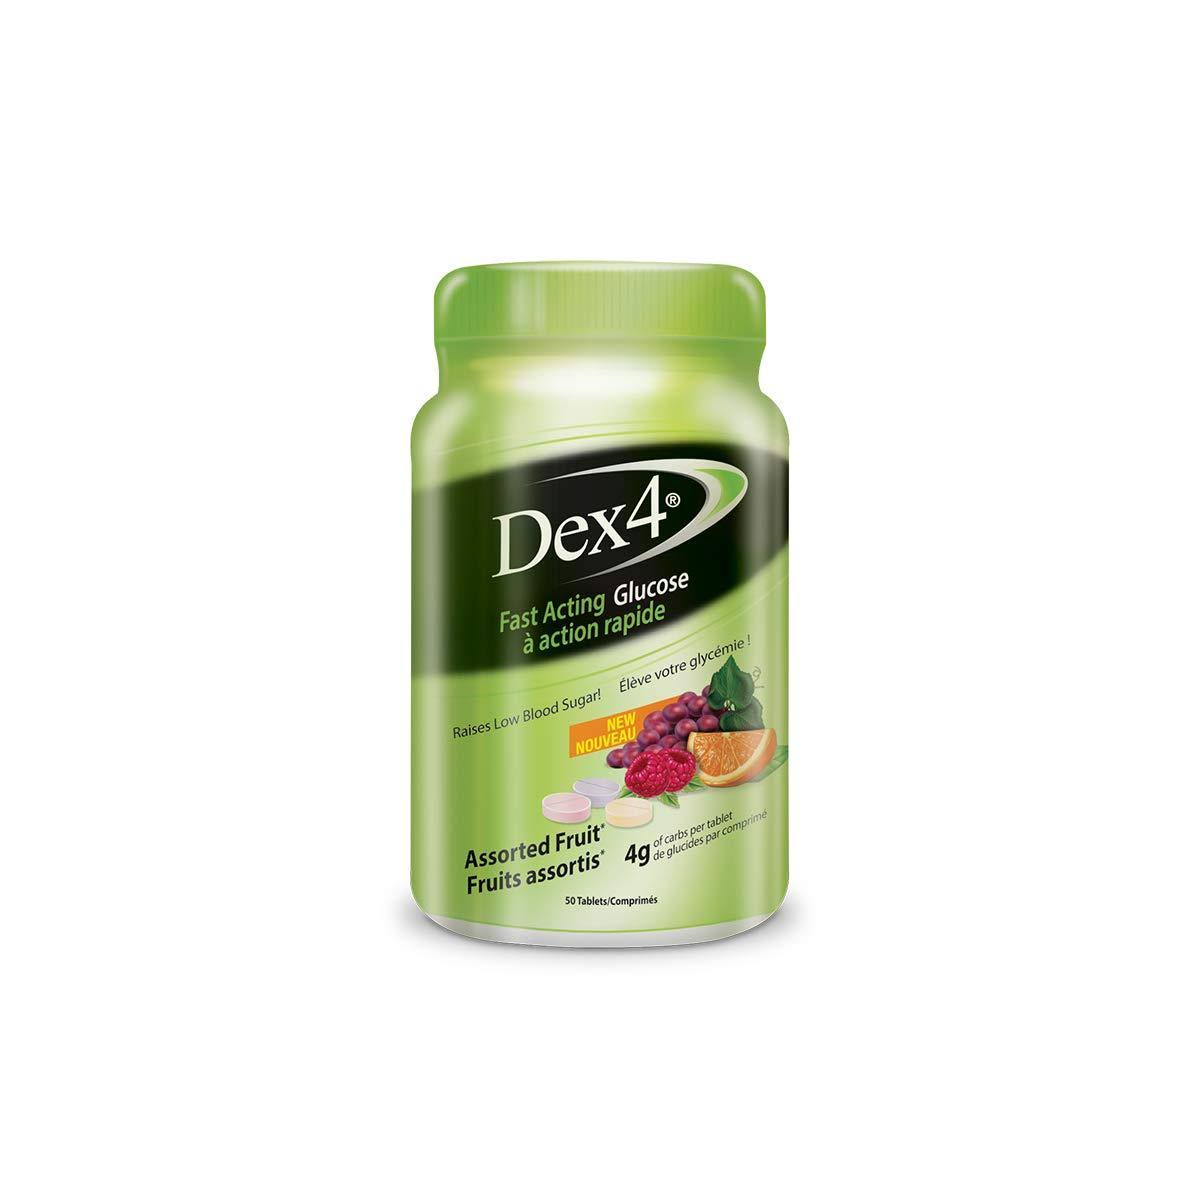 Dex4 Glucose Supplement - Assorted Fruits, 50 Tablets